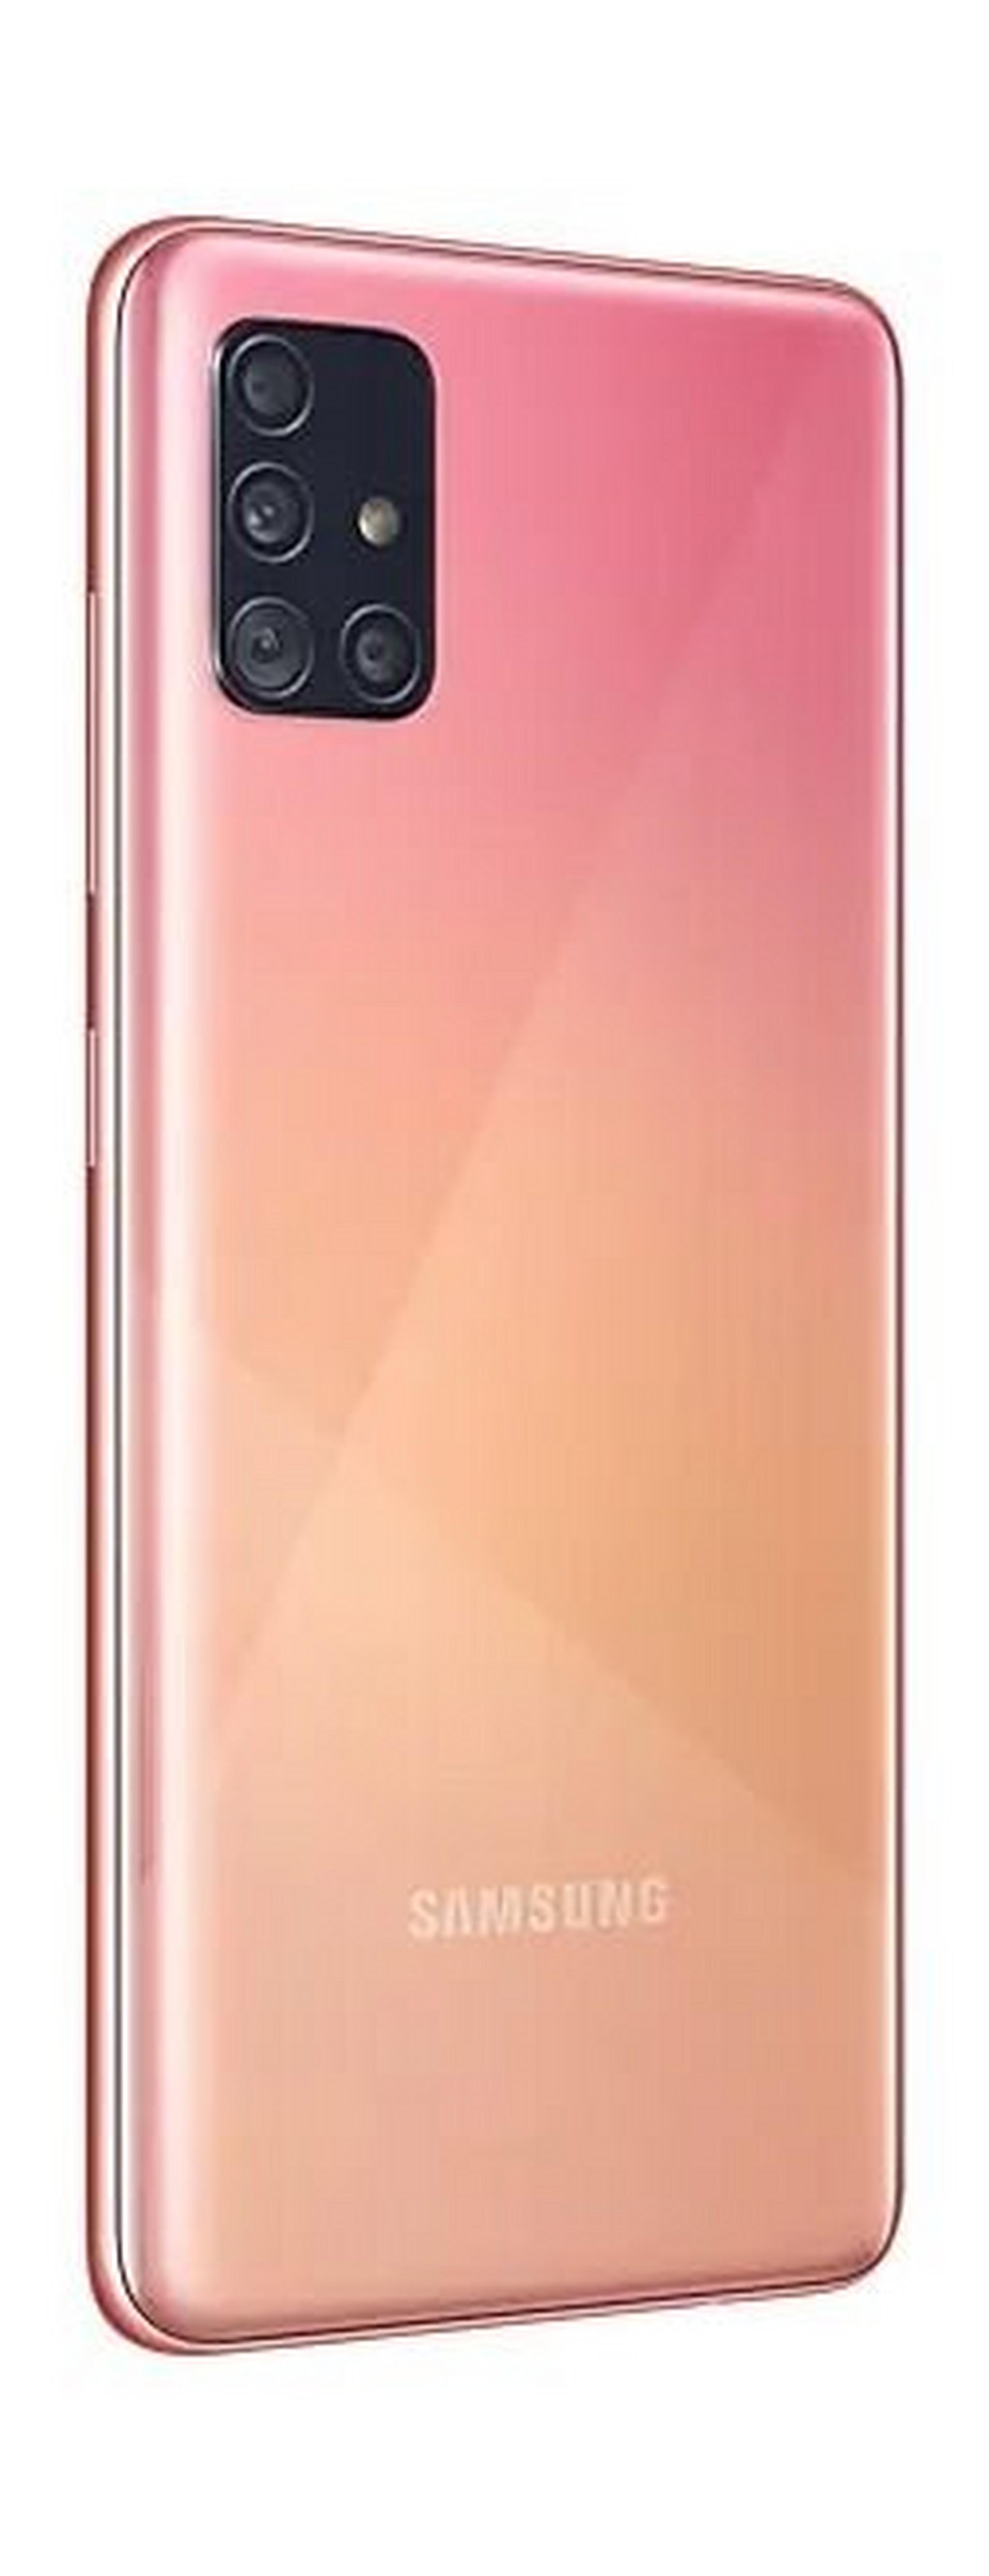 Samsung Galaxy A51 128GB Phone - Pink